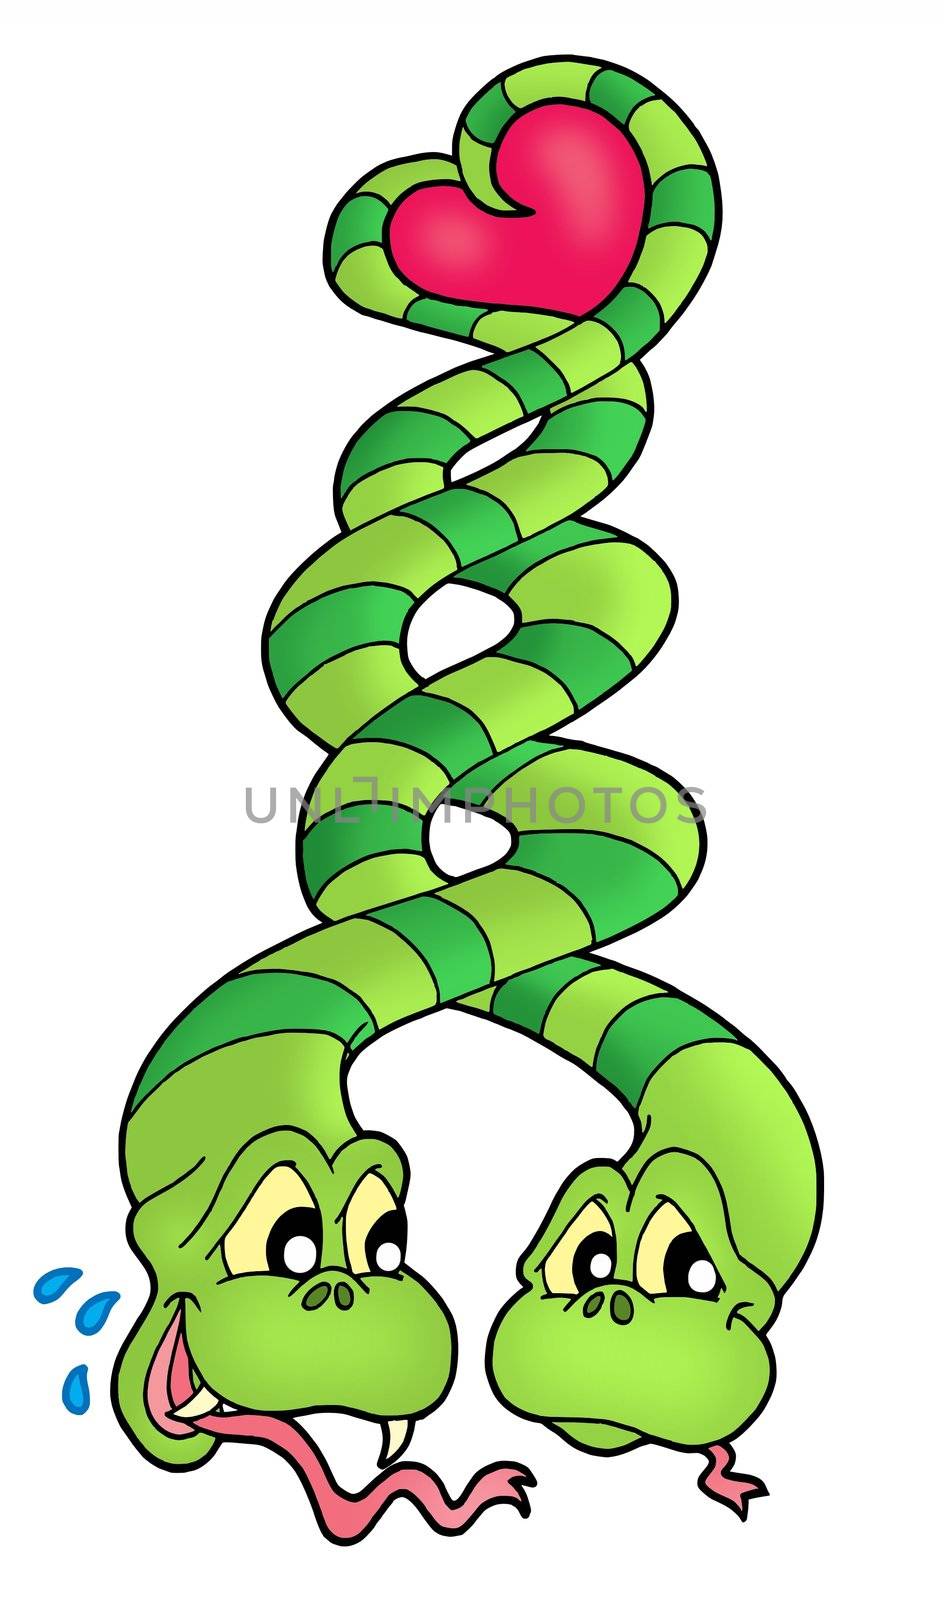 Snakes in love - color illustration.